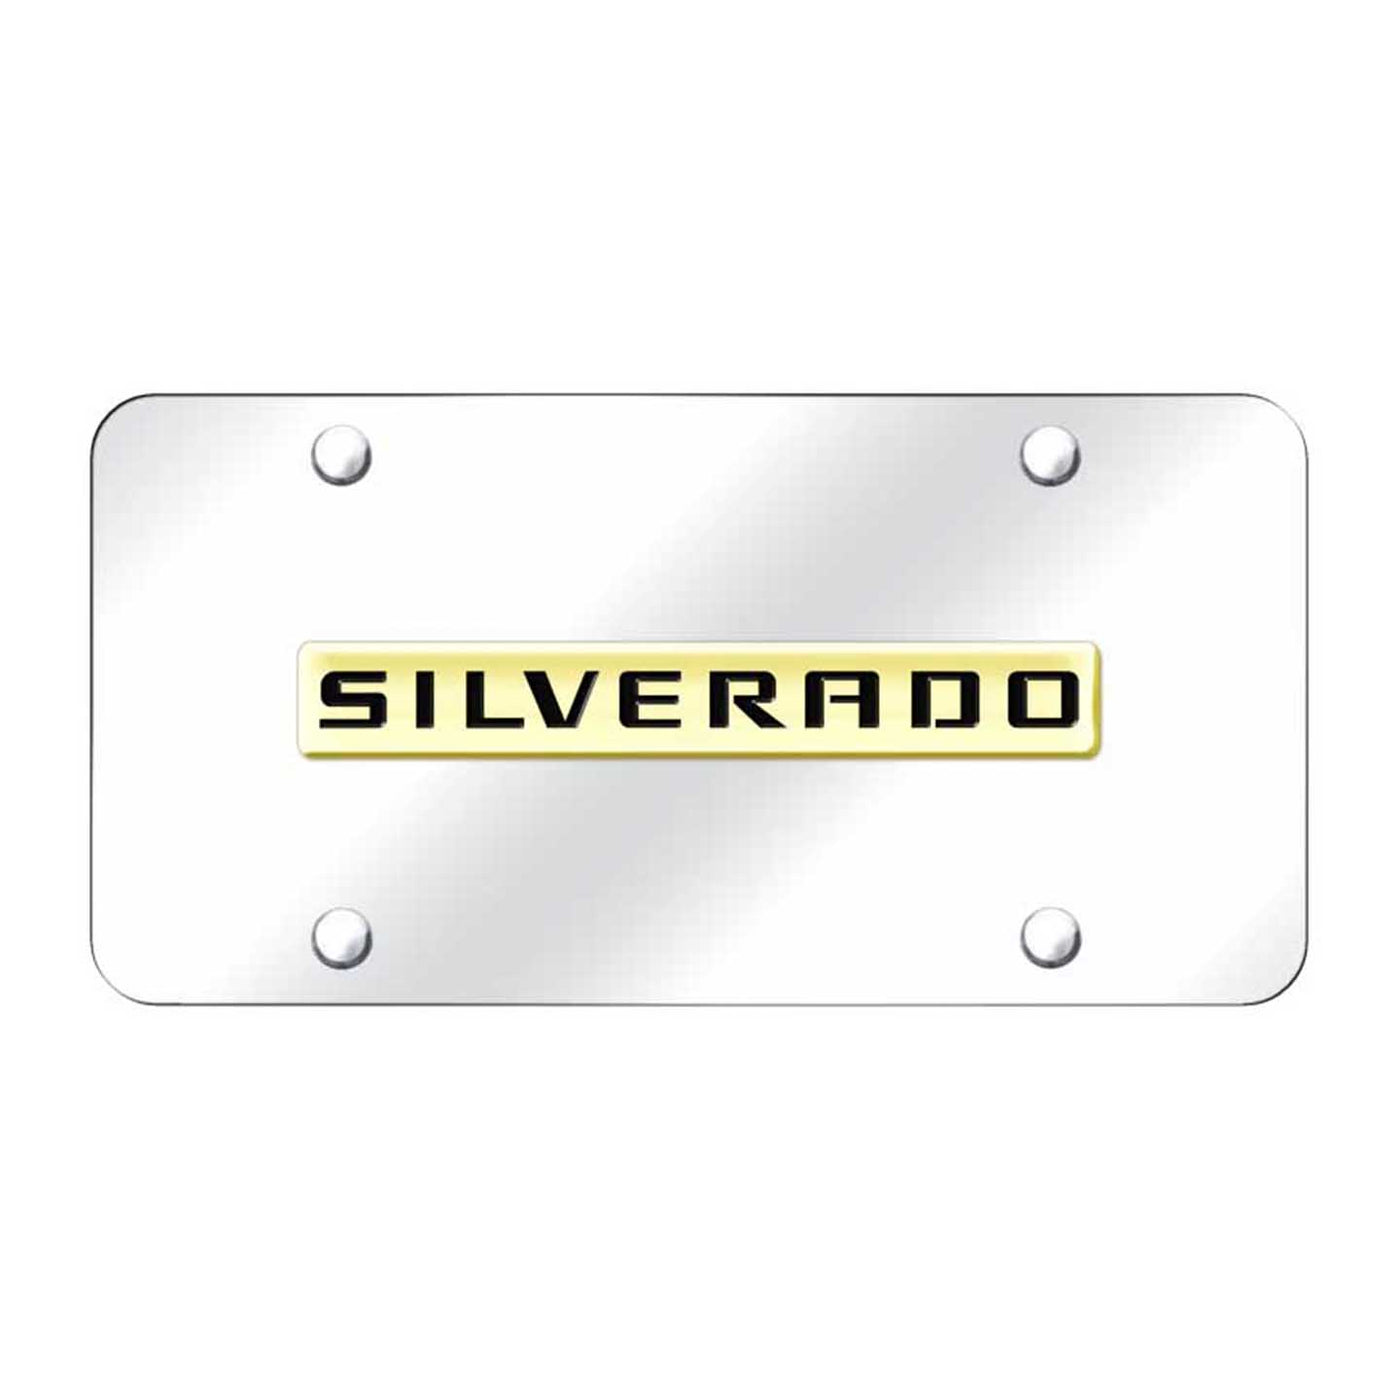 Silverado Name License Plate - Gold on Mirrored